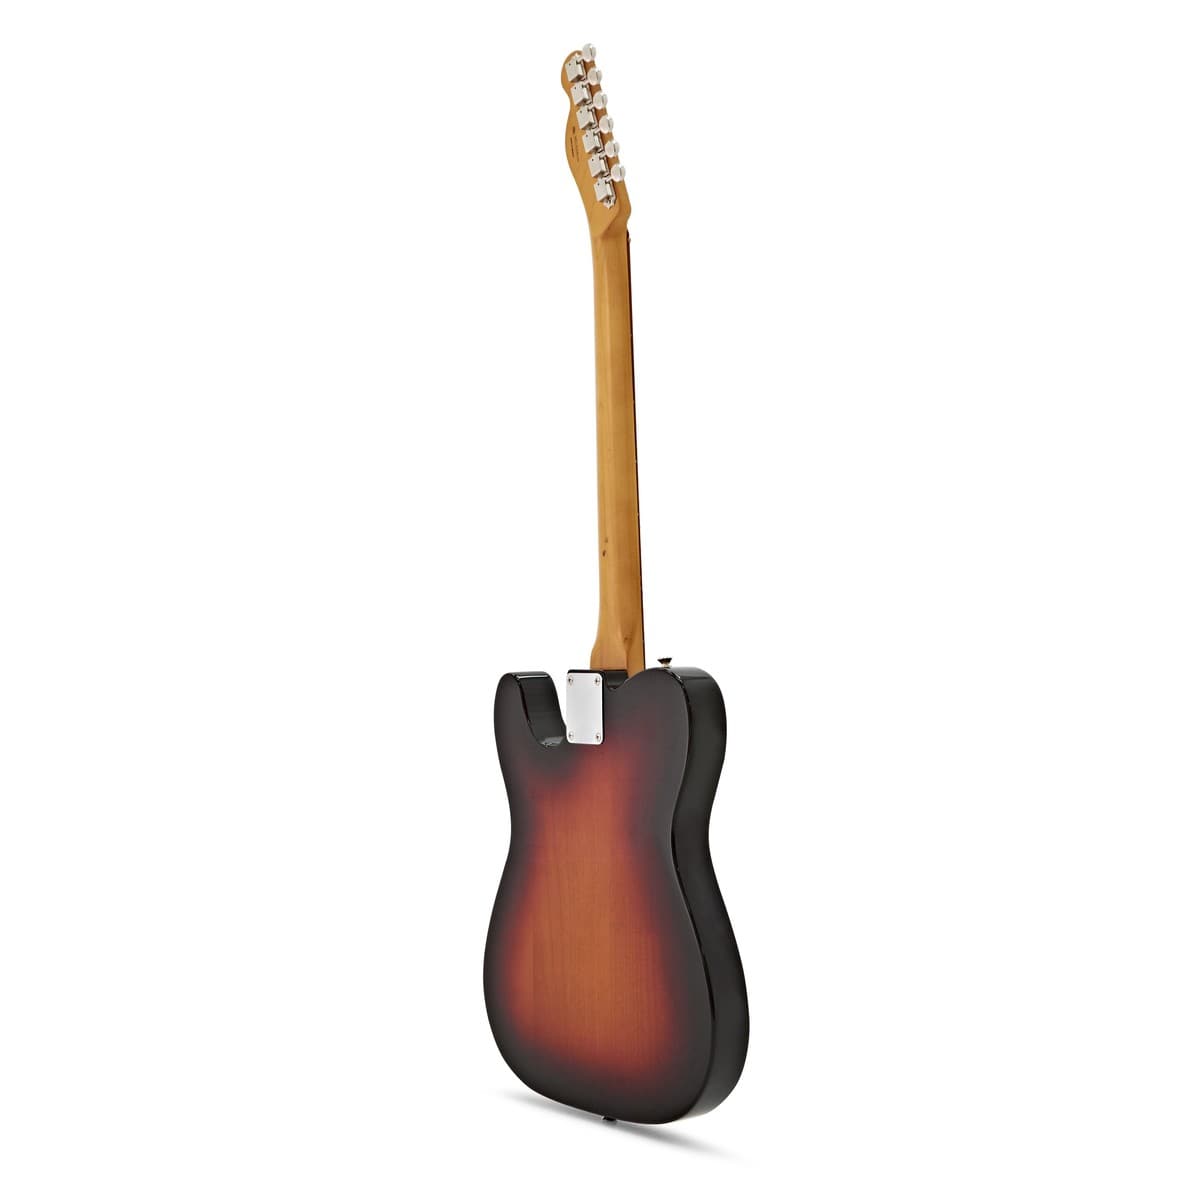 Fender Vintera '60s Telecaster Bigsby - 3 Tone Sunburst - Pau Ferro